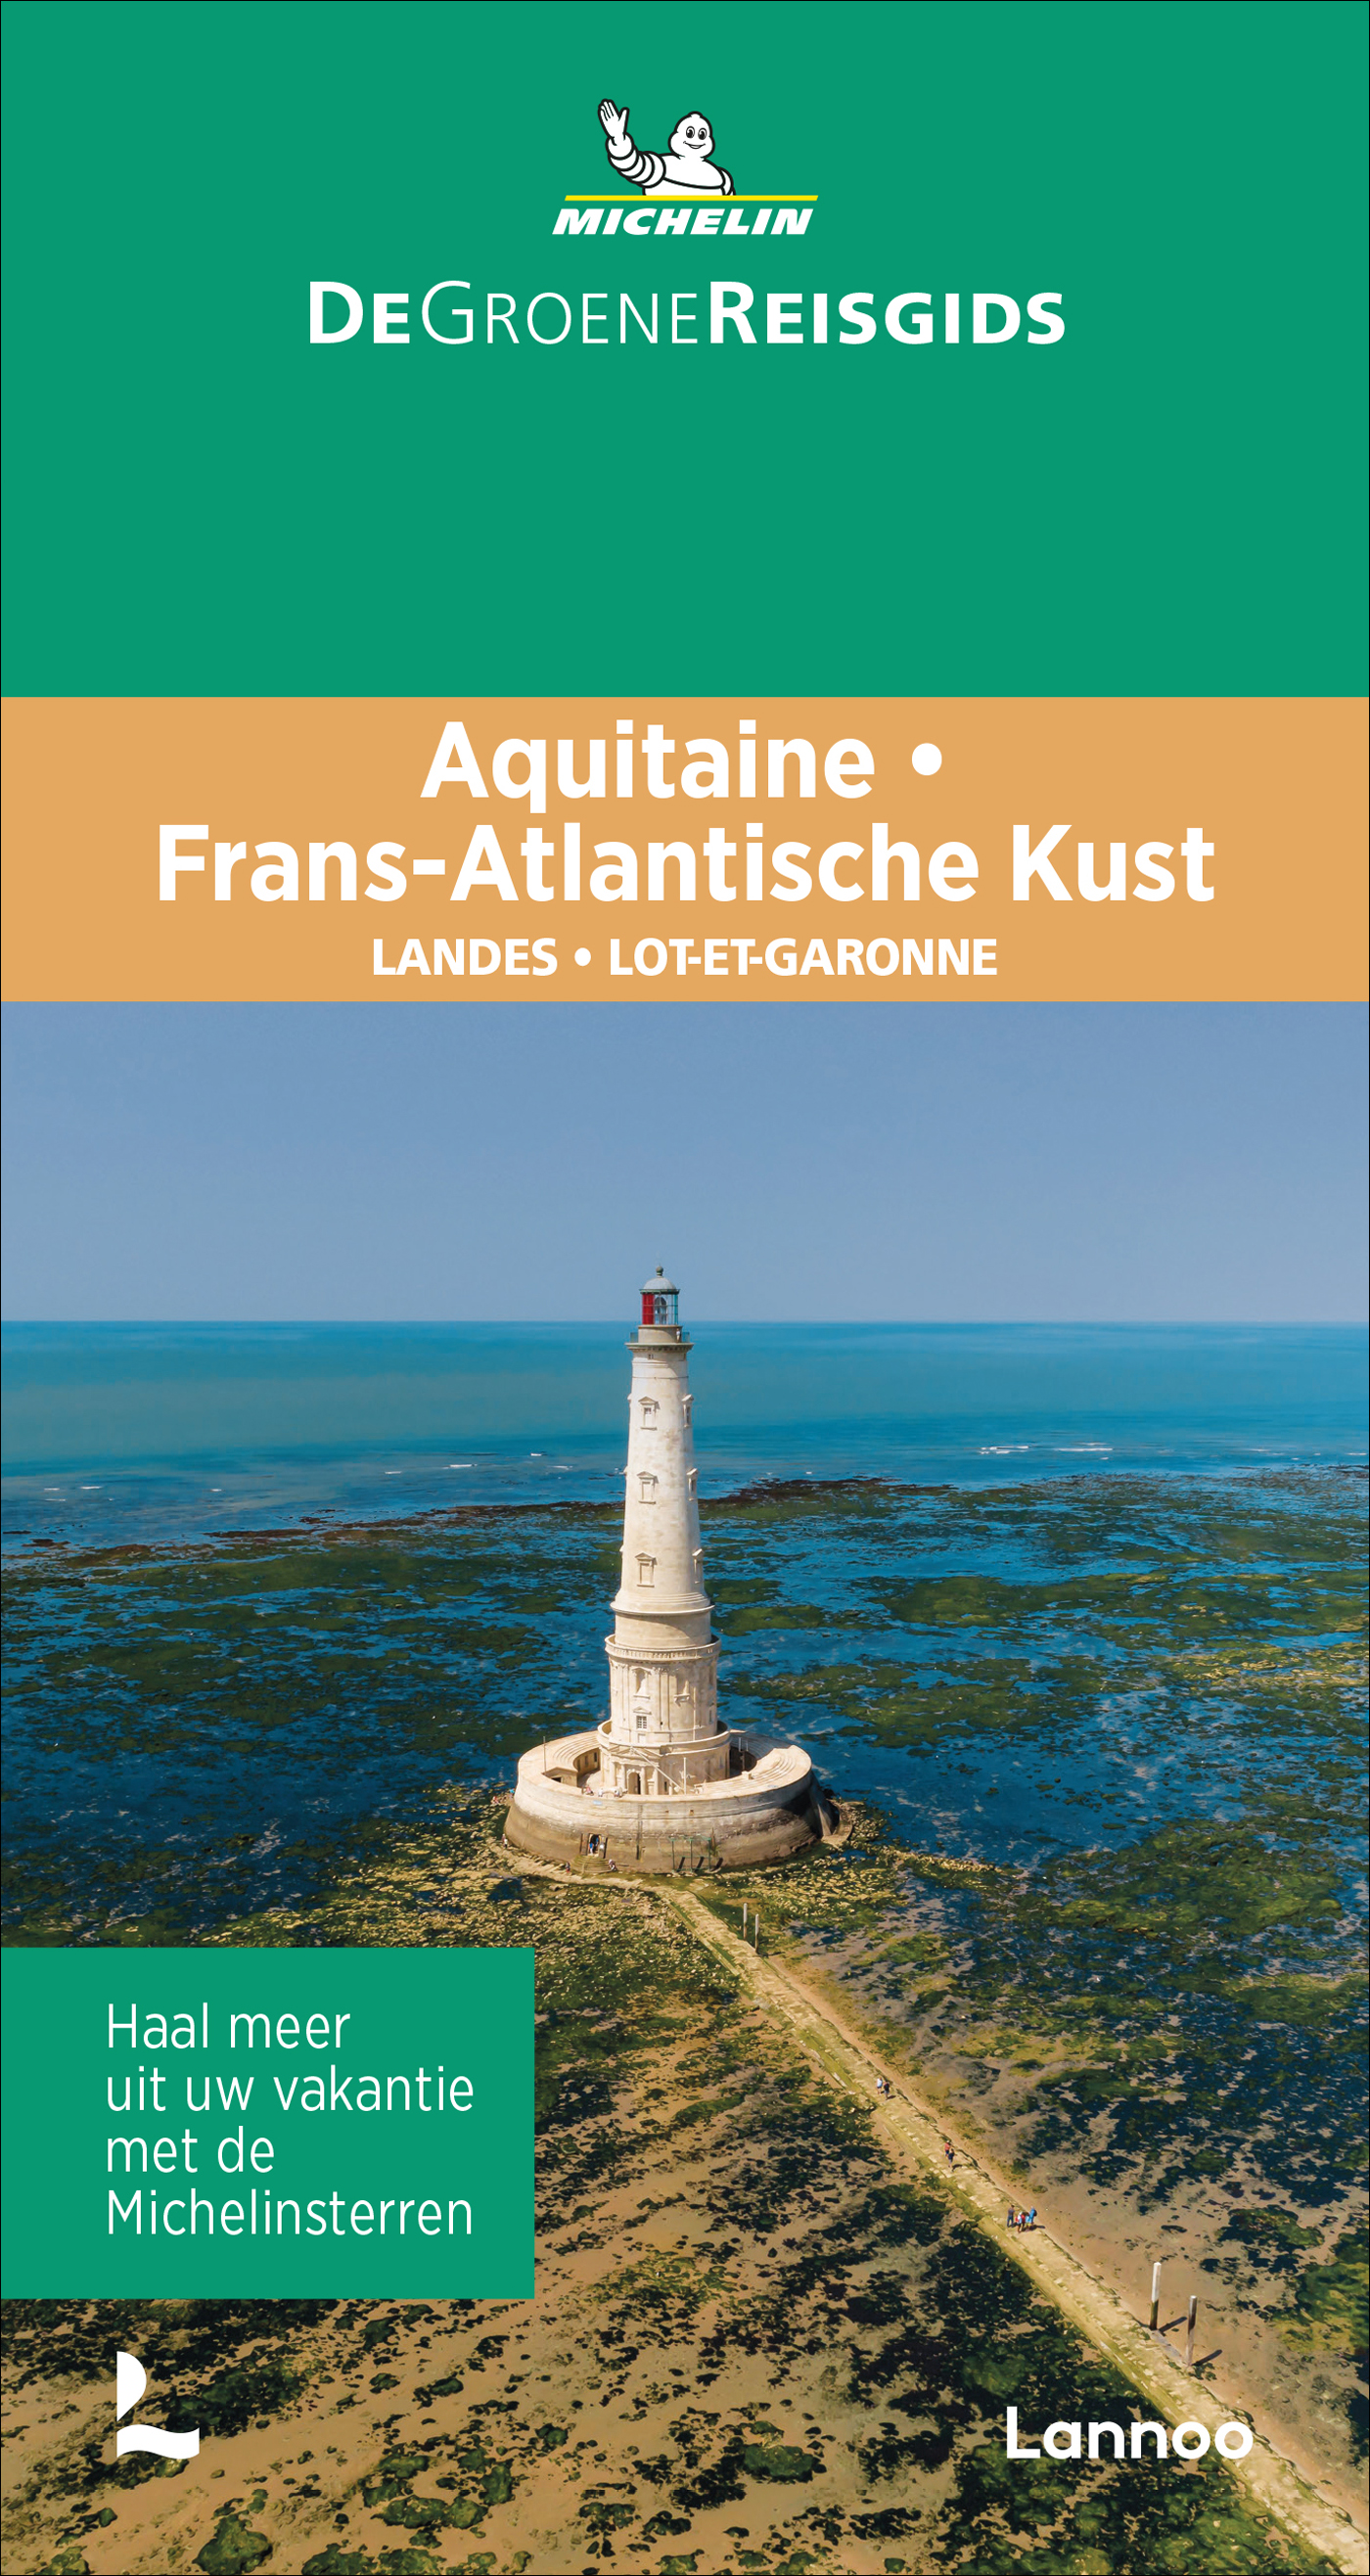 Online bestellen: Reisgids Michelin groene gids Aquitaine - Frans-Atlantische Kust | Lannoo